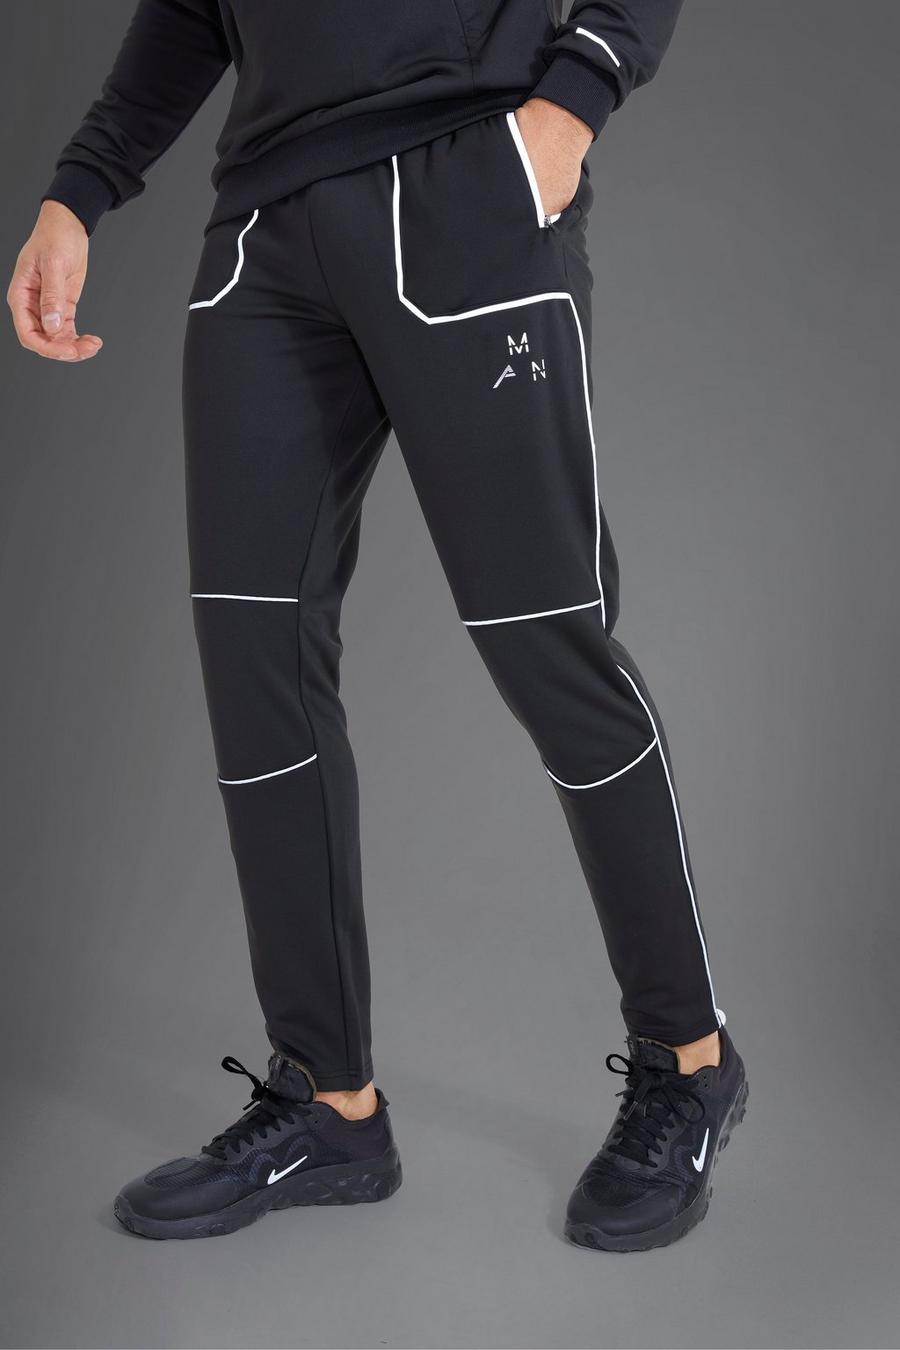 Pantaloni tuta Man Active Gym per alta performance riflettenti, Black nero